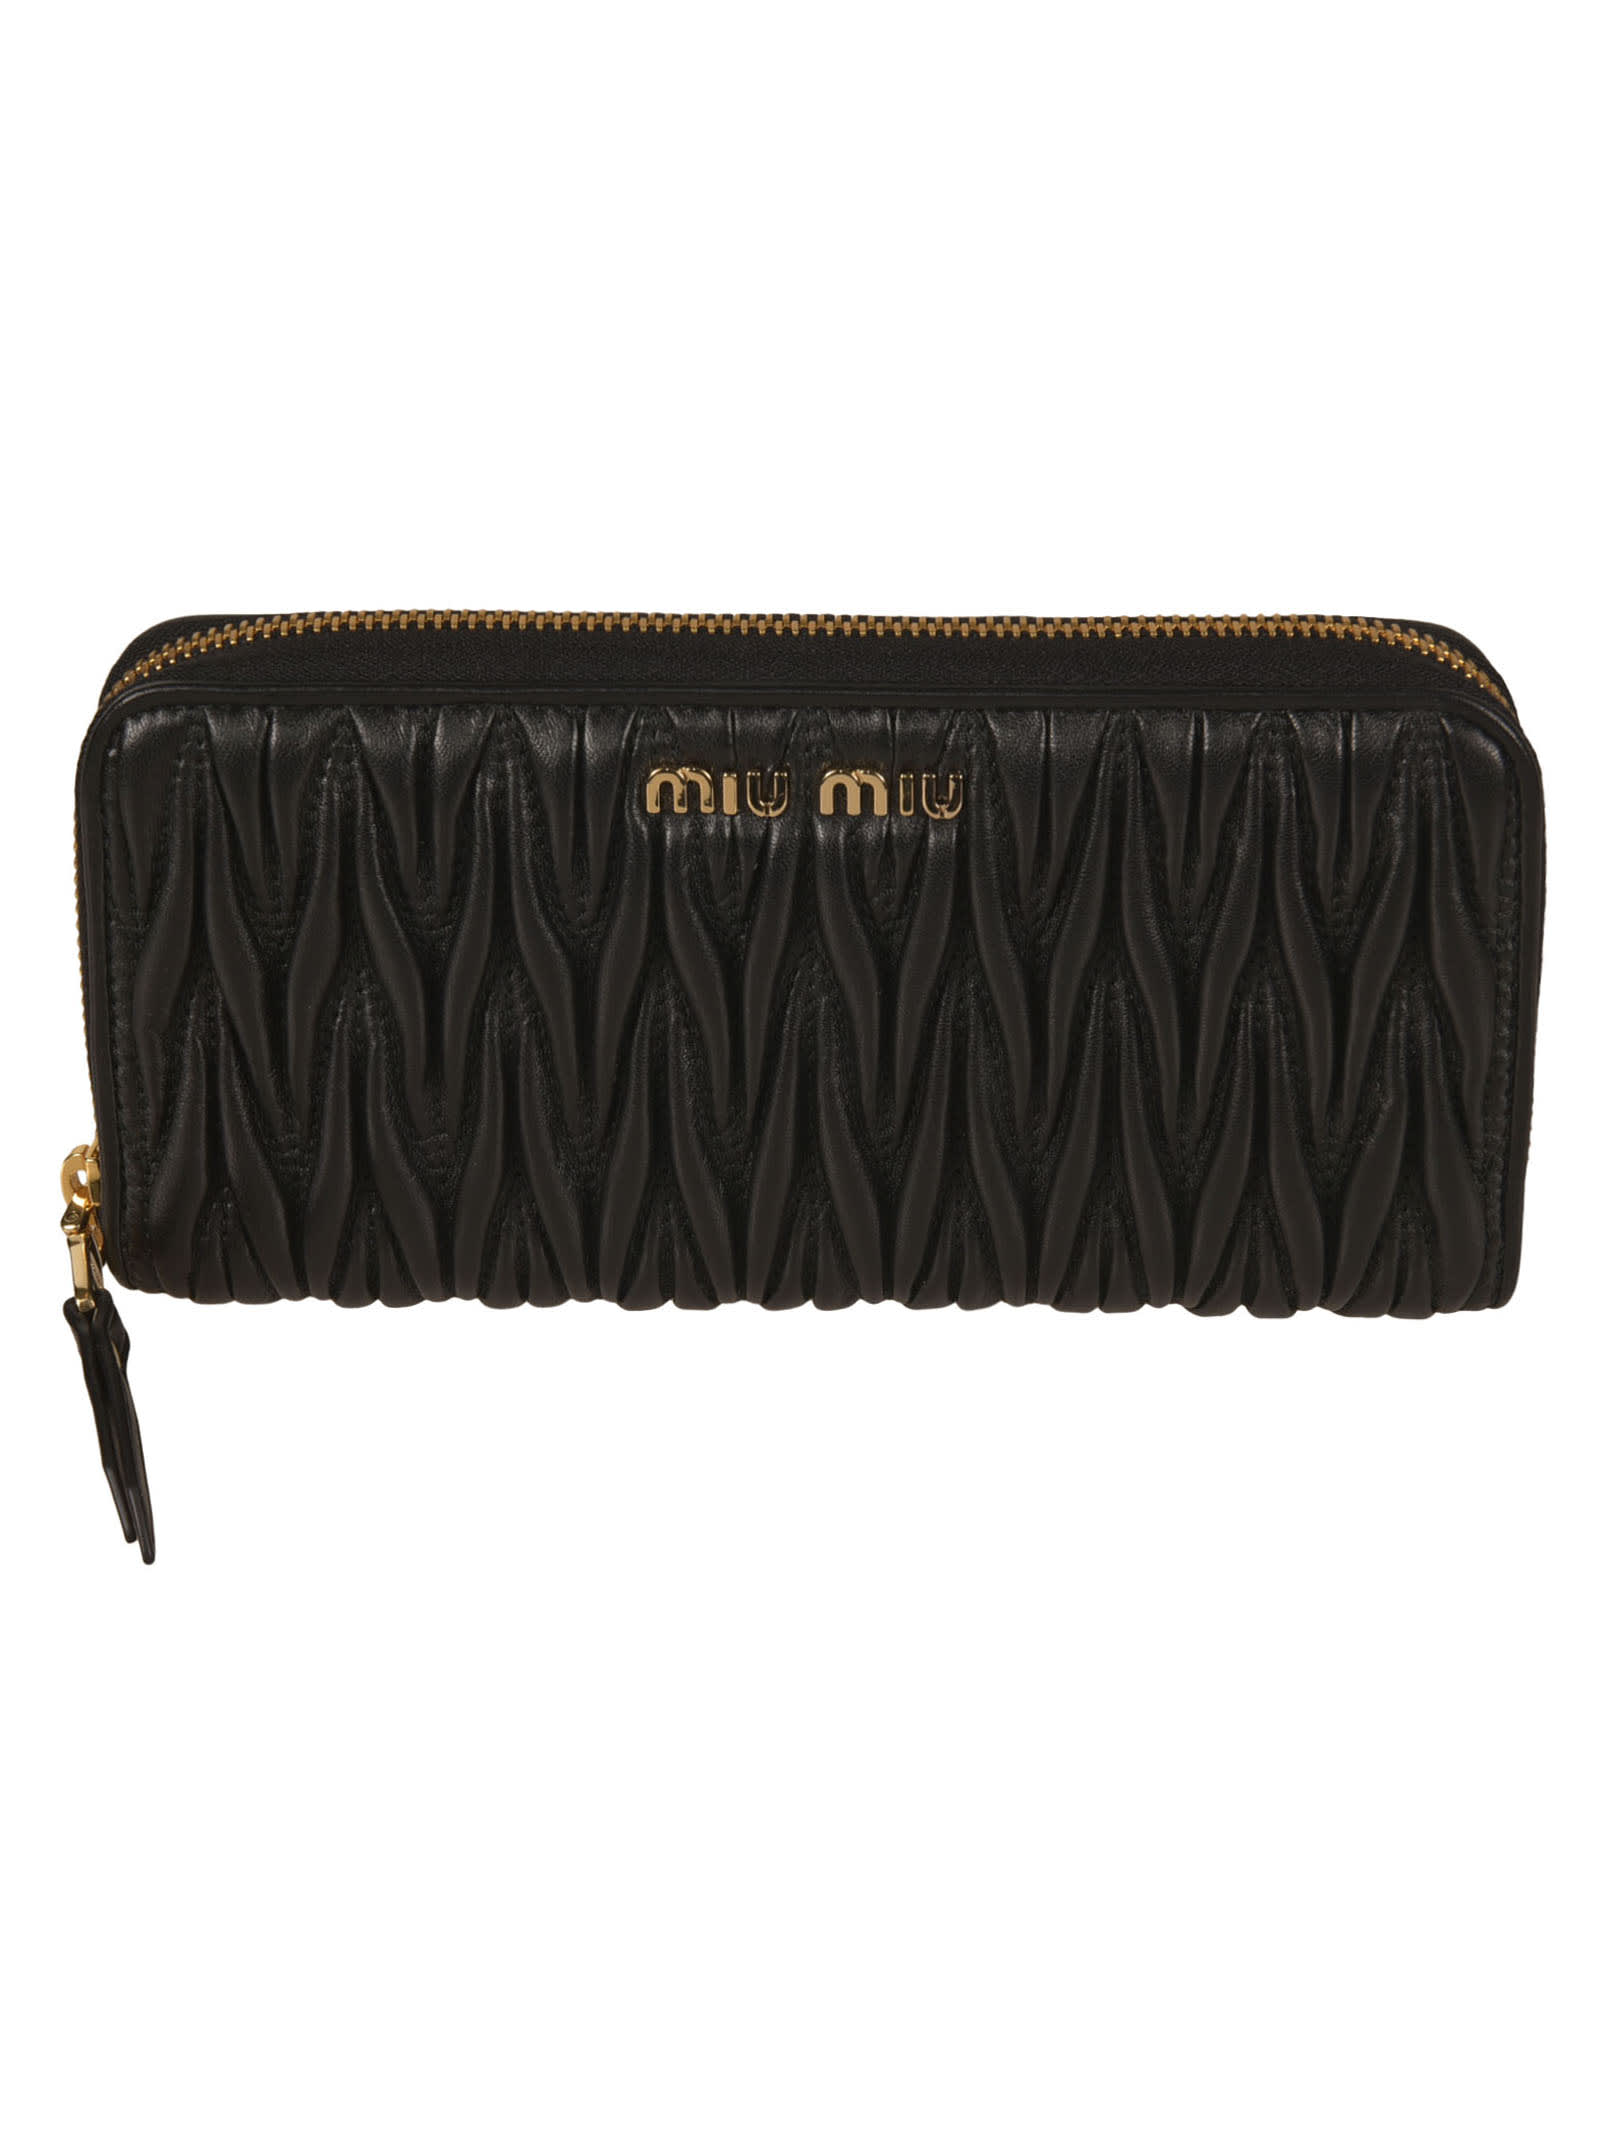 Miu Miu Metallic Logo Zip-around Wallet